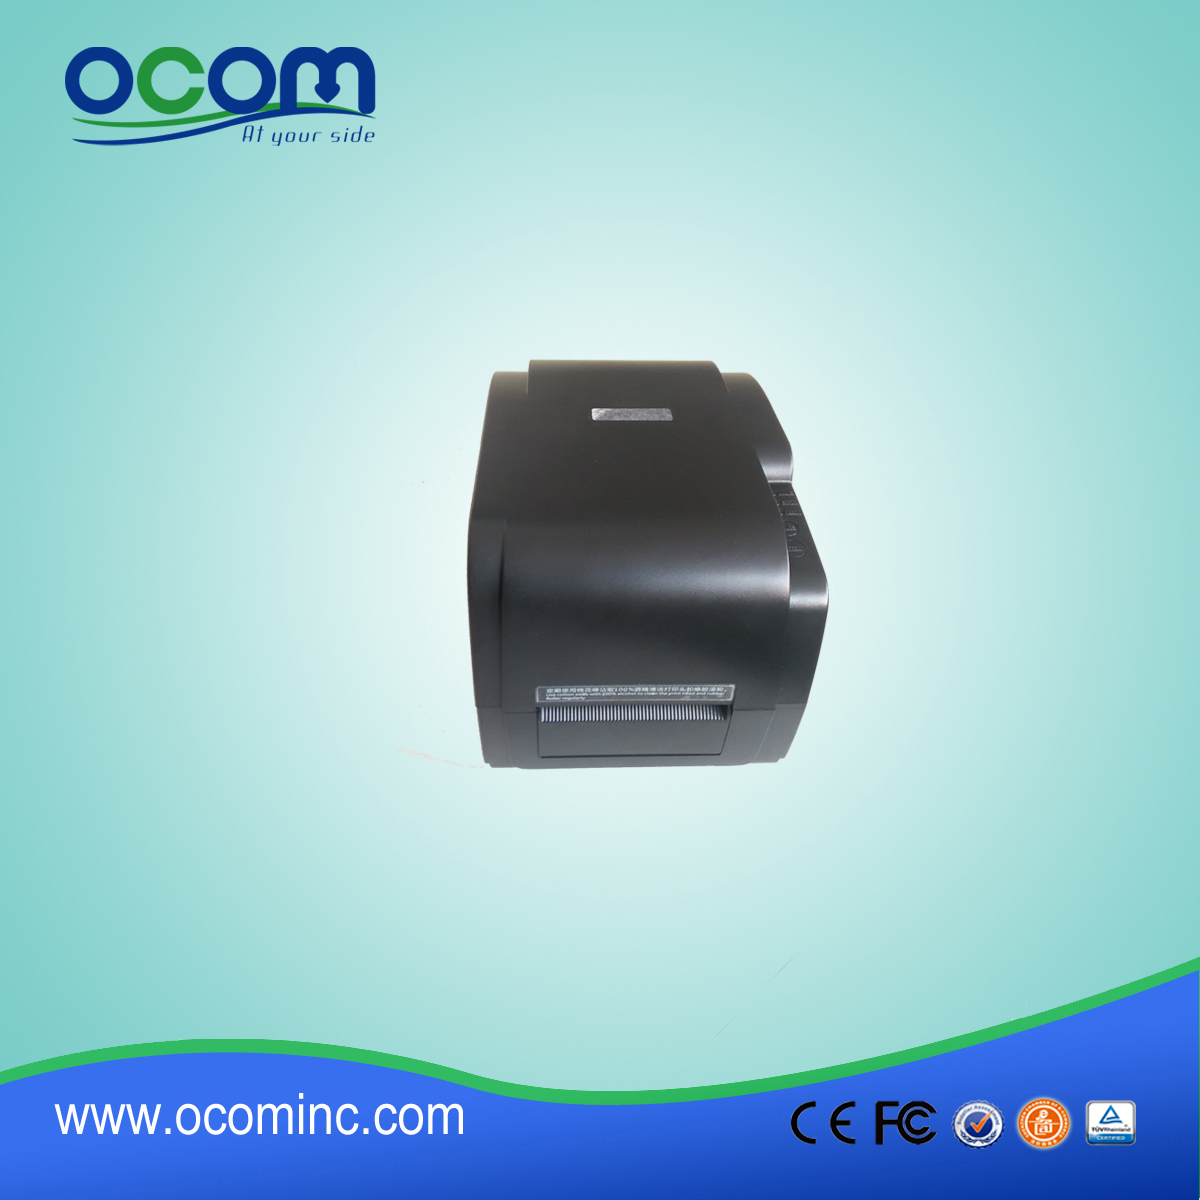 Thermische Transfer en Direct Thermal Barcode Label Printer (Model Nr .: OCBP-003)